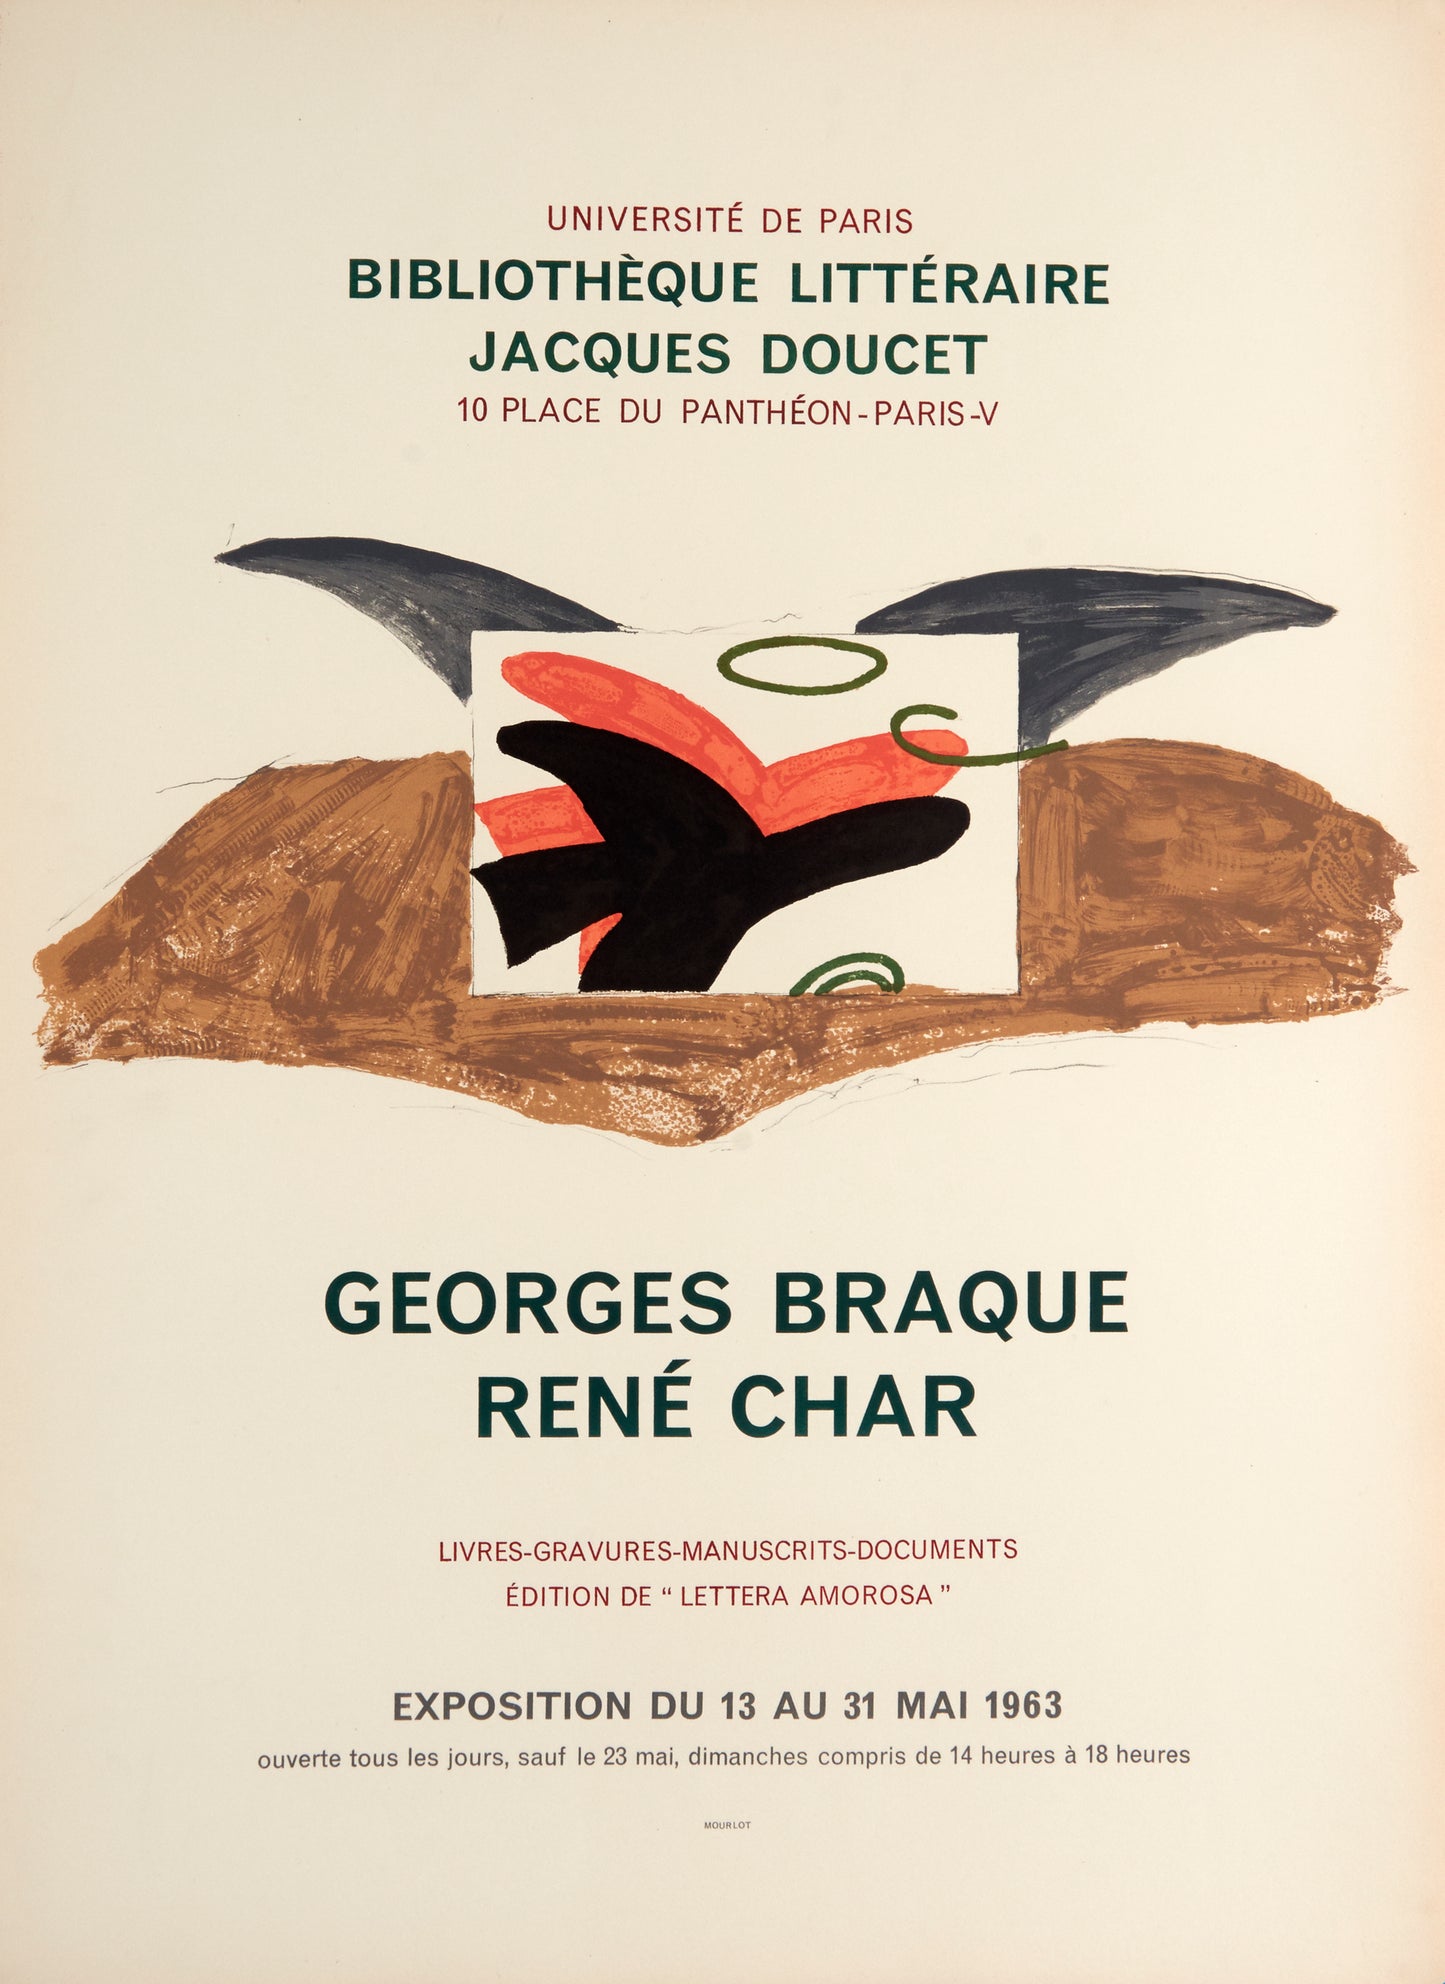 Lettera Amorosa, Jacques Doucet by Georges Braque, 1963 - Mourlot Editions - Fine_Art - Poster - Lithograph - Wall Art - Vintage - Prints - Original